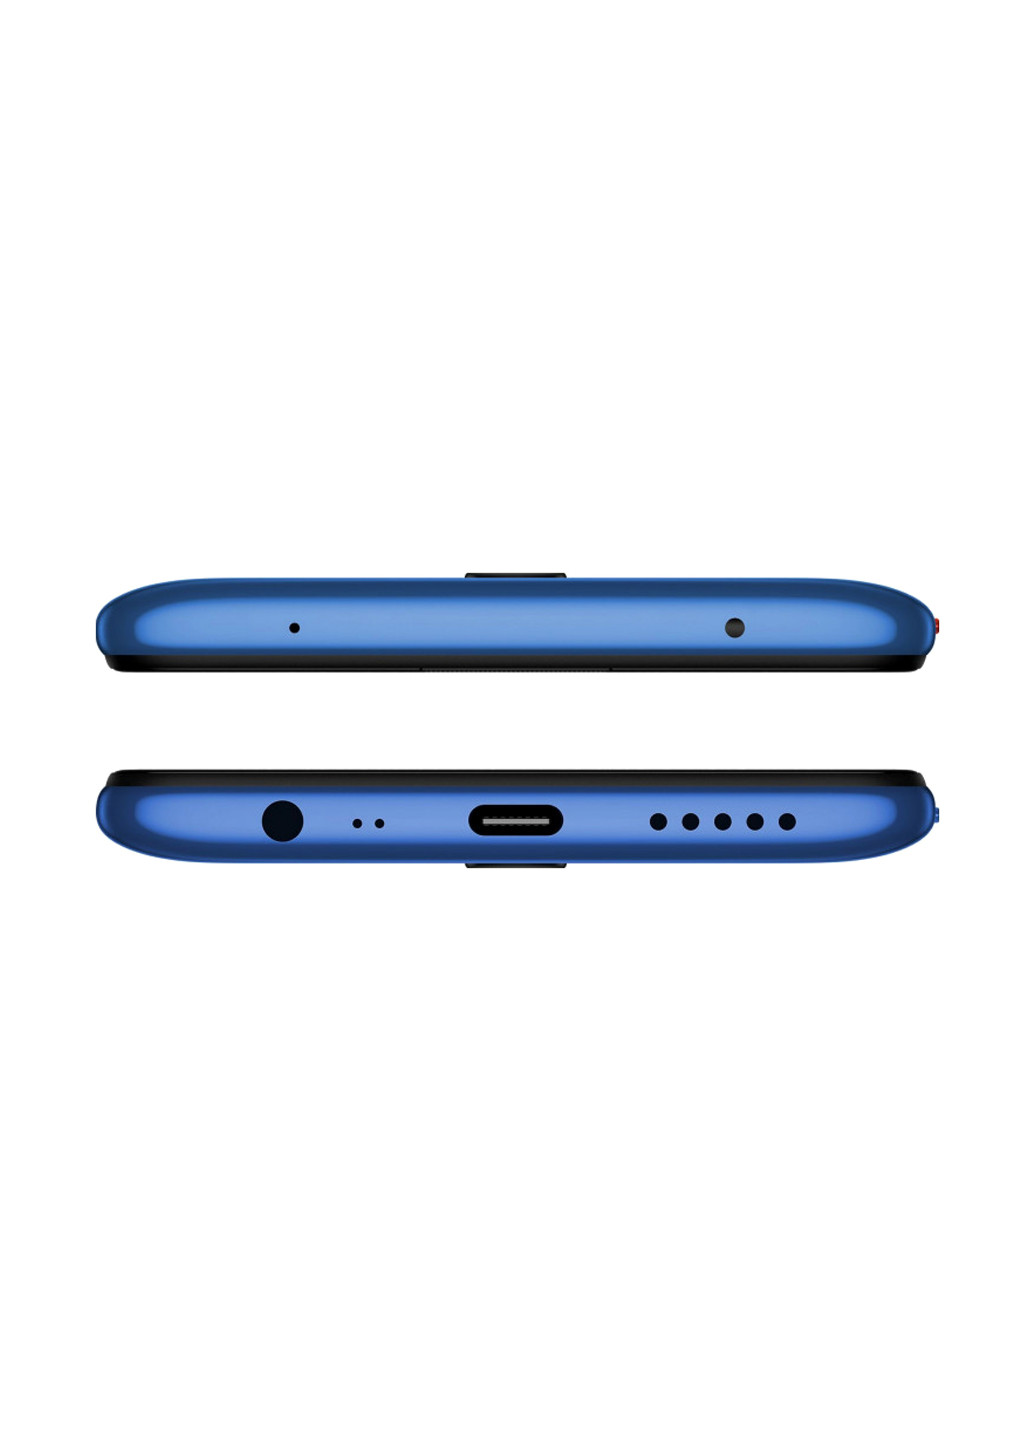 Смартфон Redmi 8 4 / 64GB Sapphire Blue Xiaomi redmi 8 4/64gb sapphire blue (153999346)